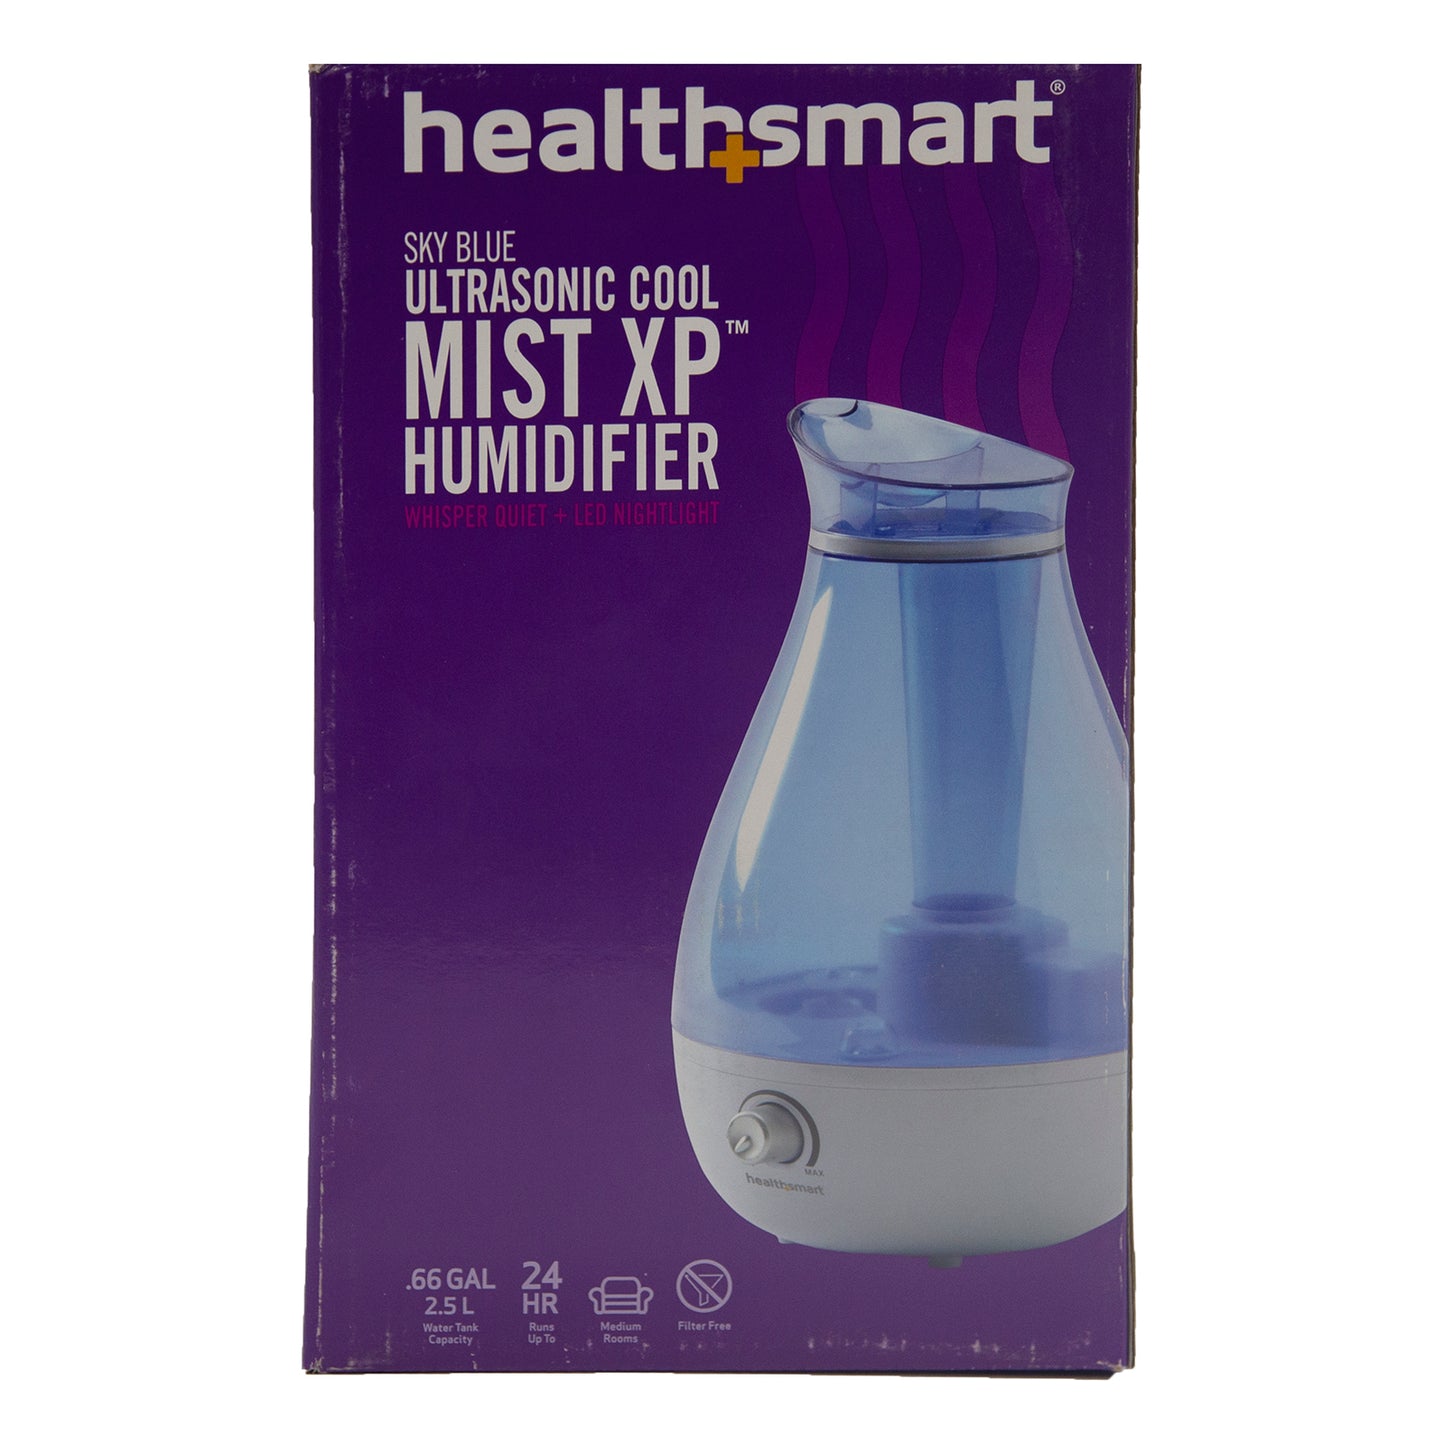 HealthSmart Mist XP Humidifier